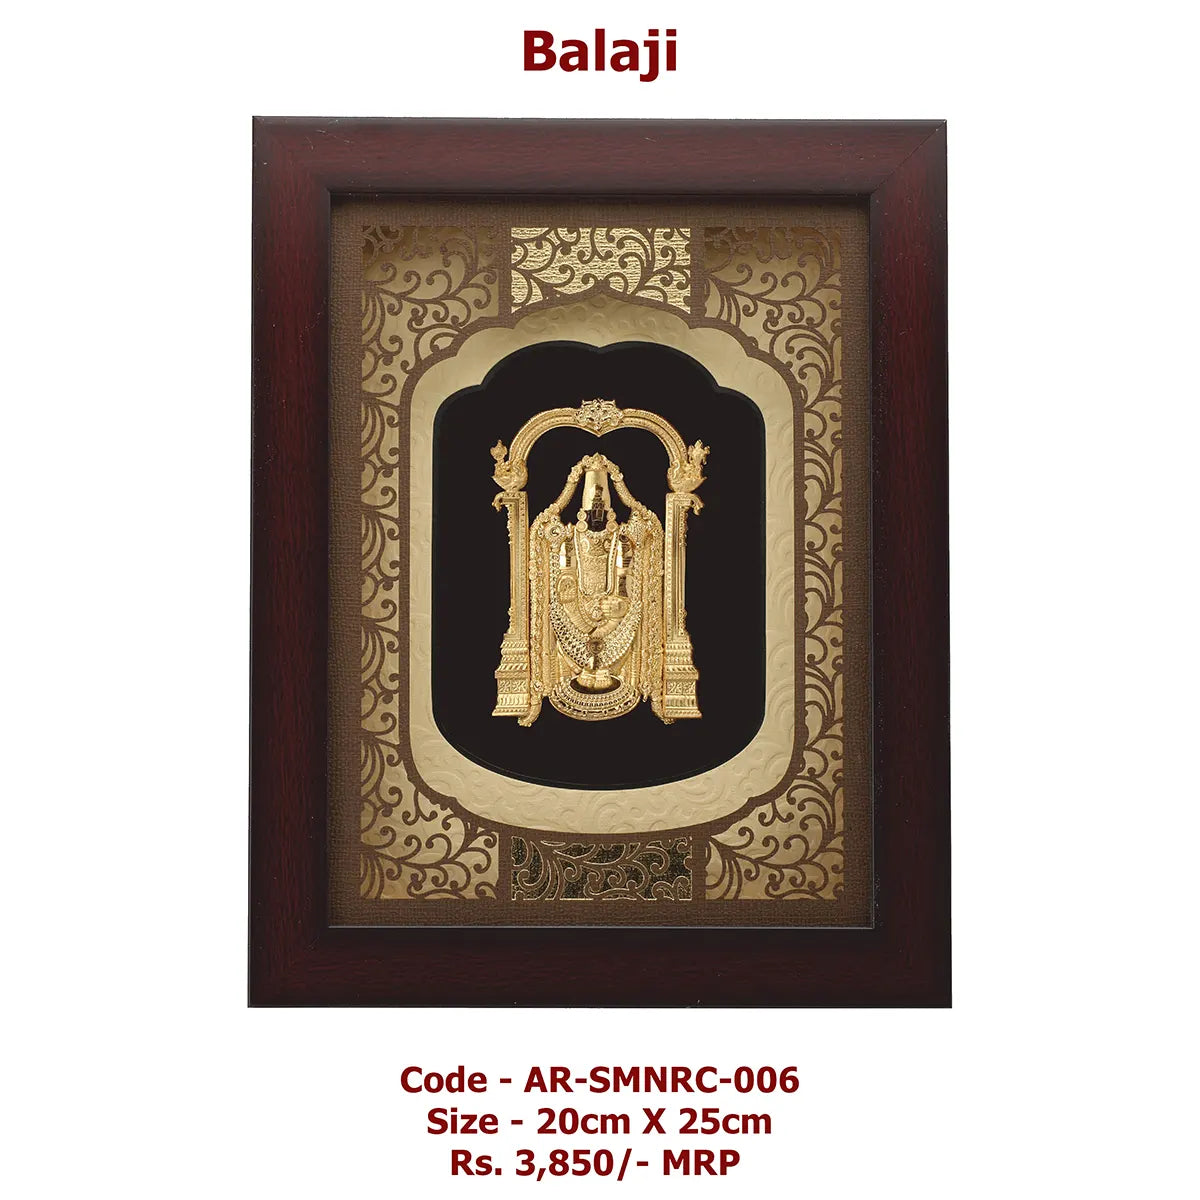 Balaji Frame 20cm x 25cm size